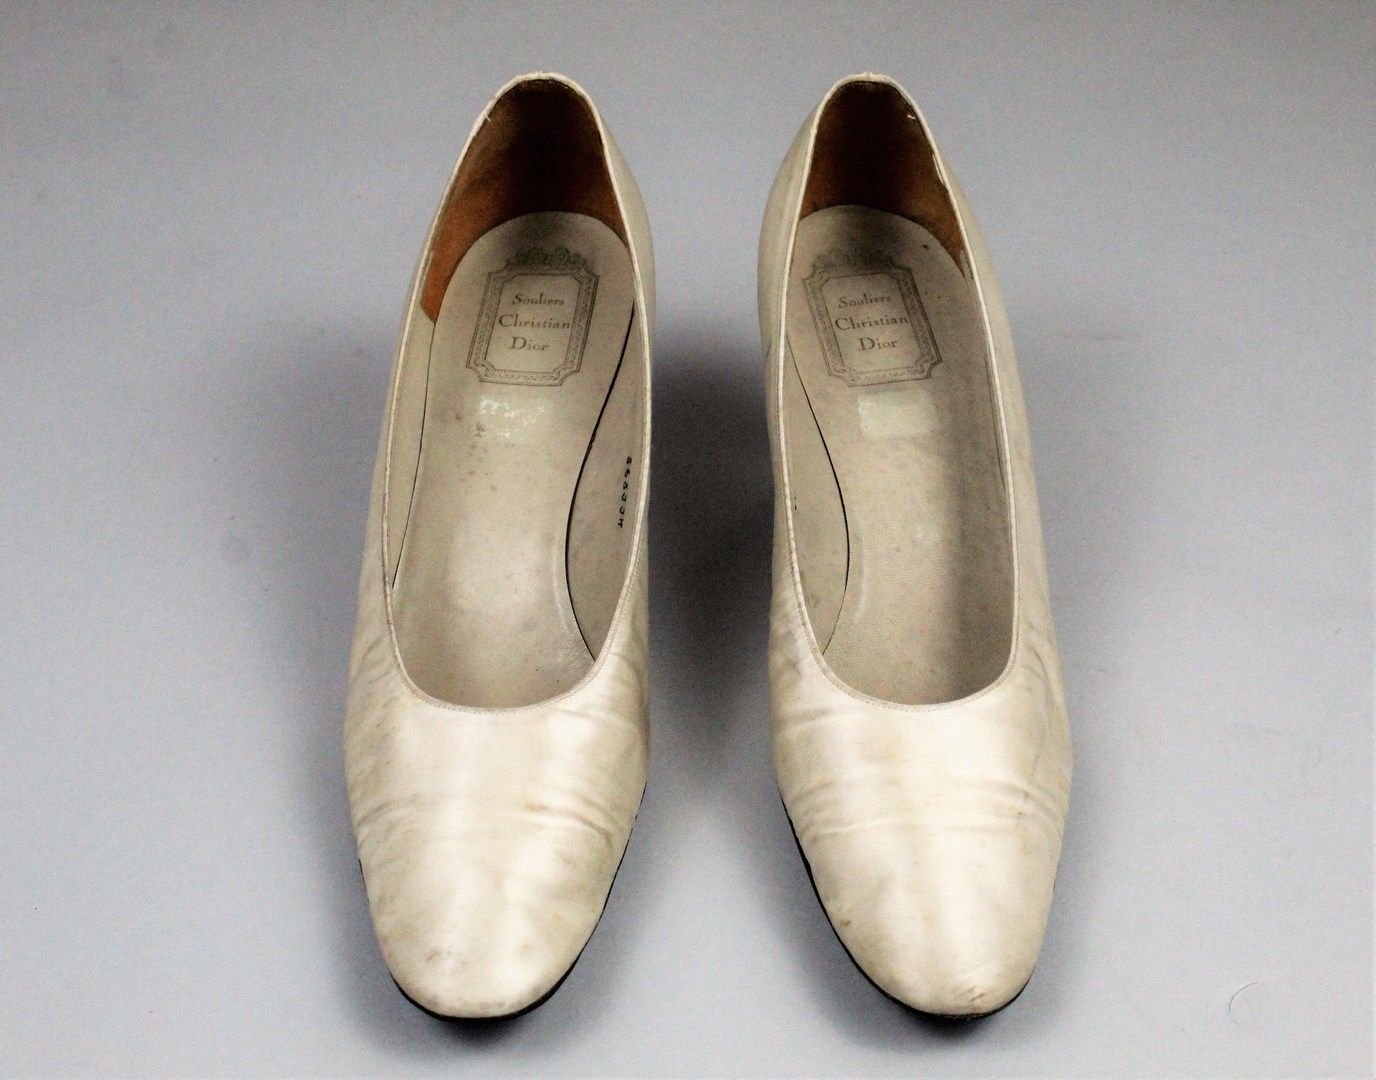 Null 克里斯蒂安-迪奥（CHRISTIAN DIOR）鞋（约1960年）。



象牙色丝缎包裹的小高跟鞋。



尺寸：8.5厘米

鞋跟高度：5.5厘米&hellip;